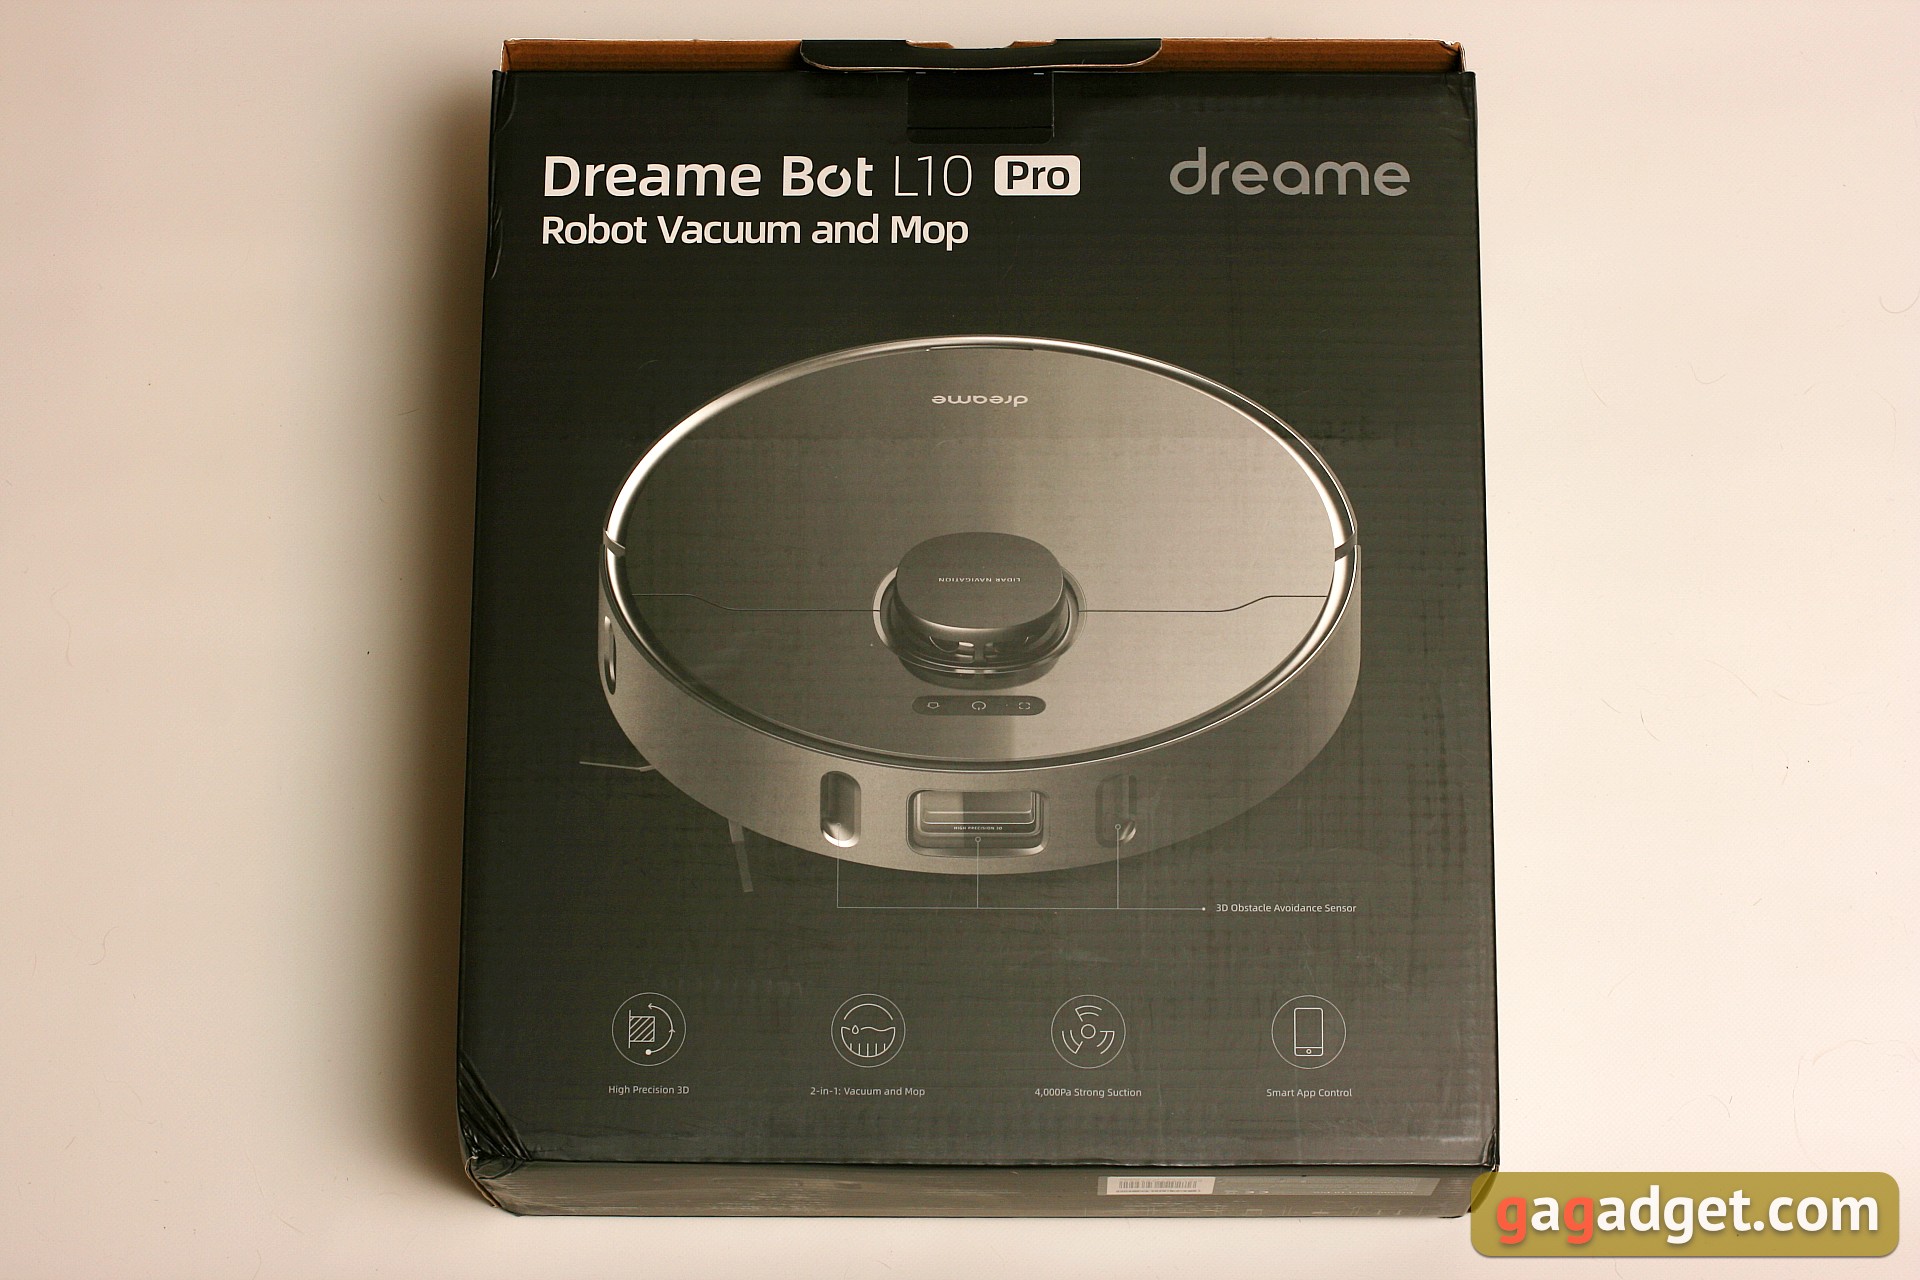 Dreame Bot L10 Pro review: Almost a dream machine